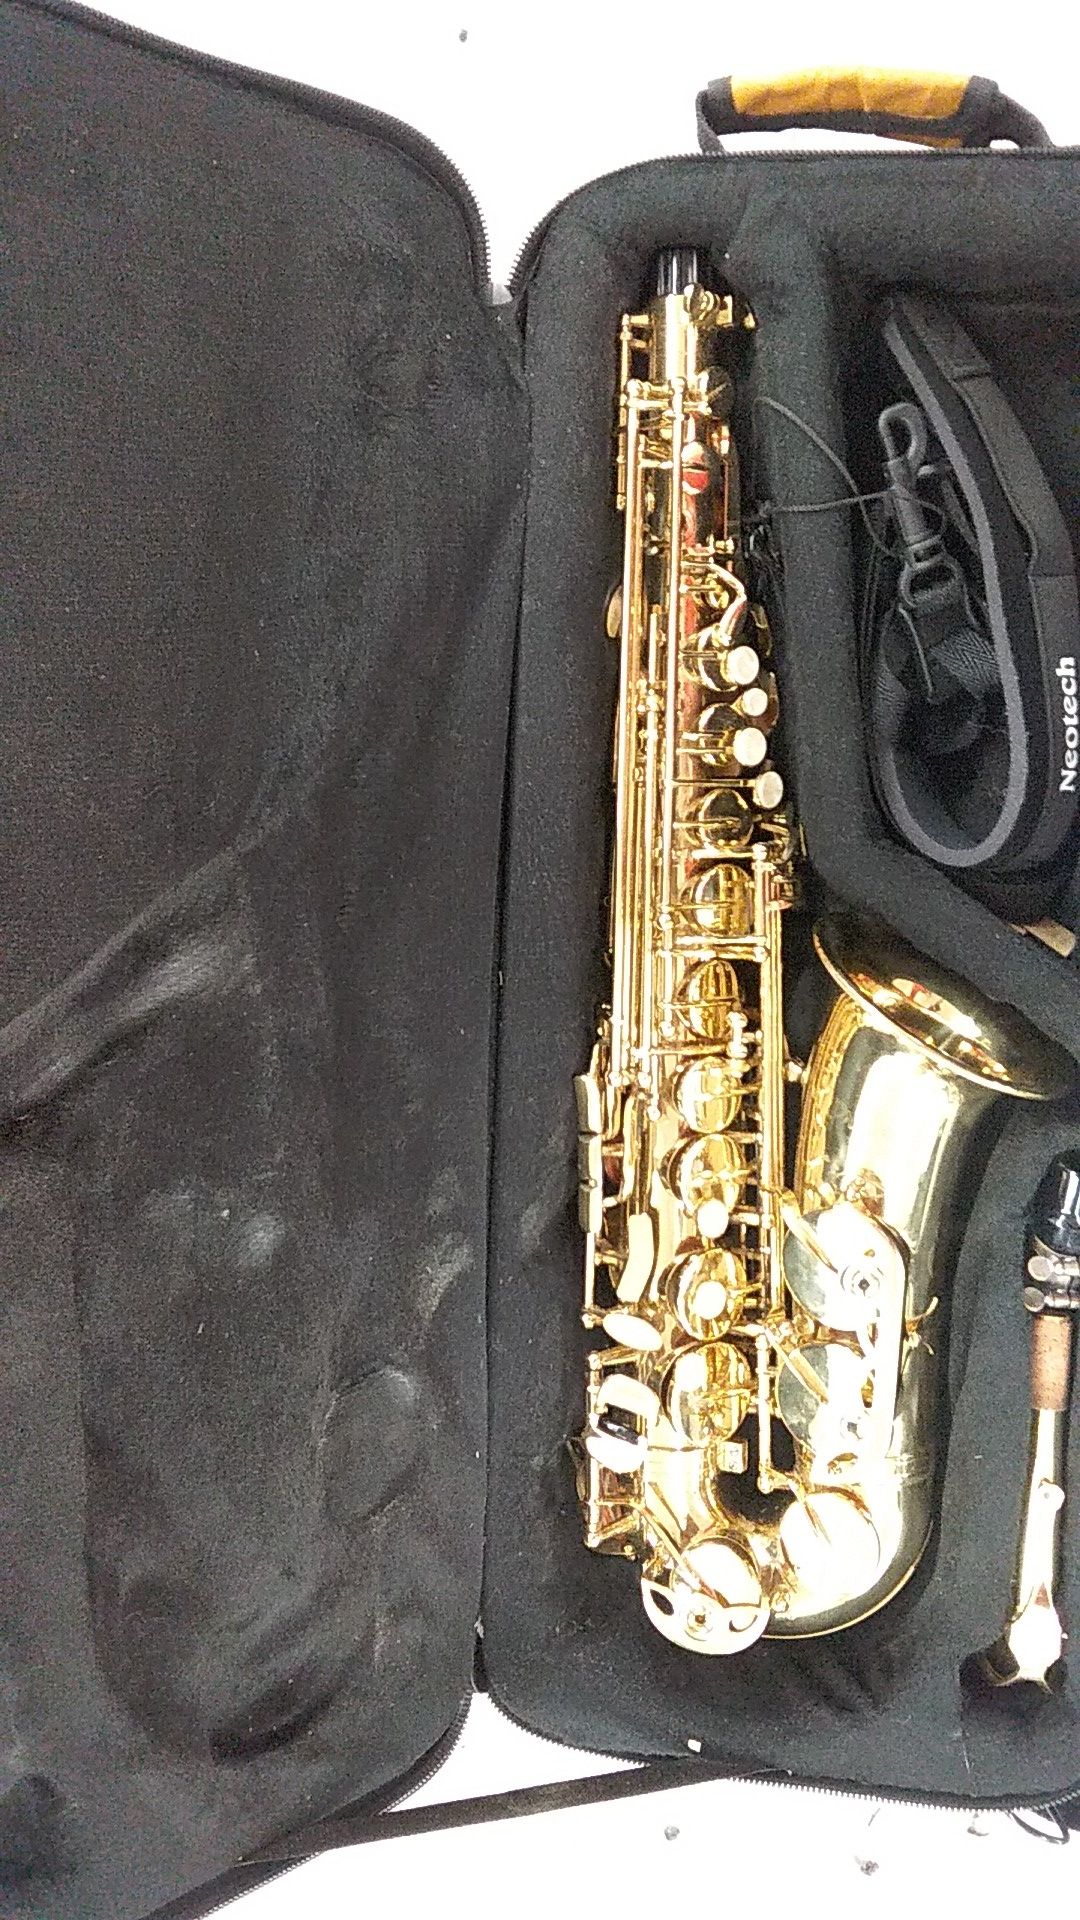 Prelude saxophone